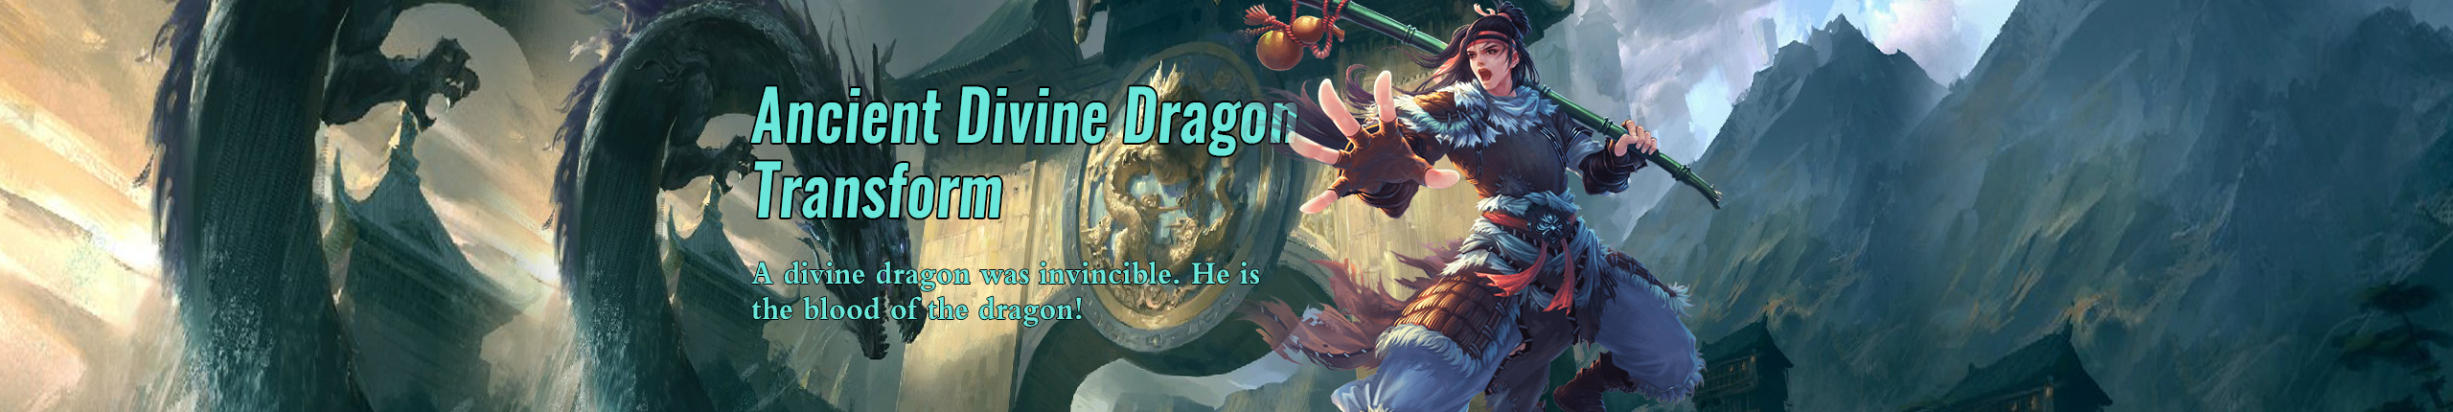 Ancient Divine Dragon Transform